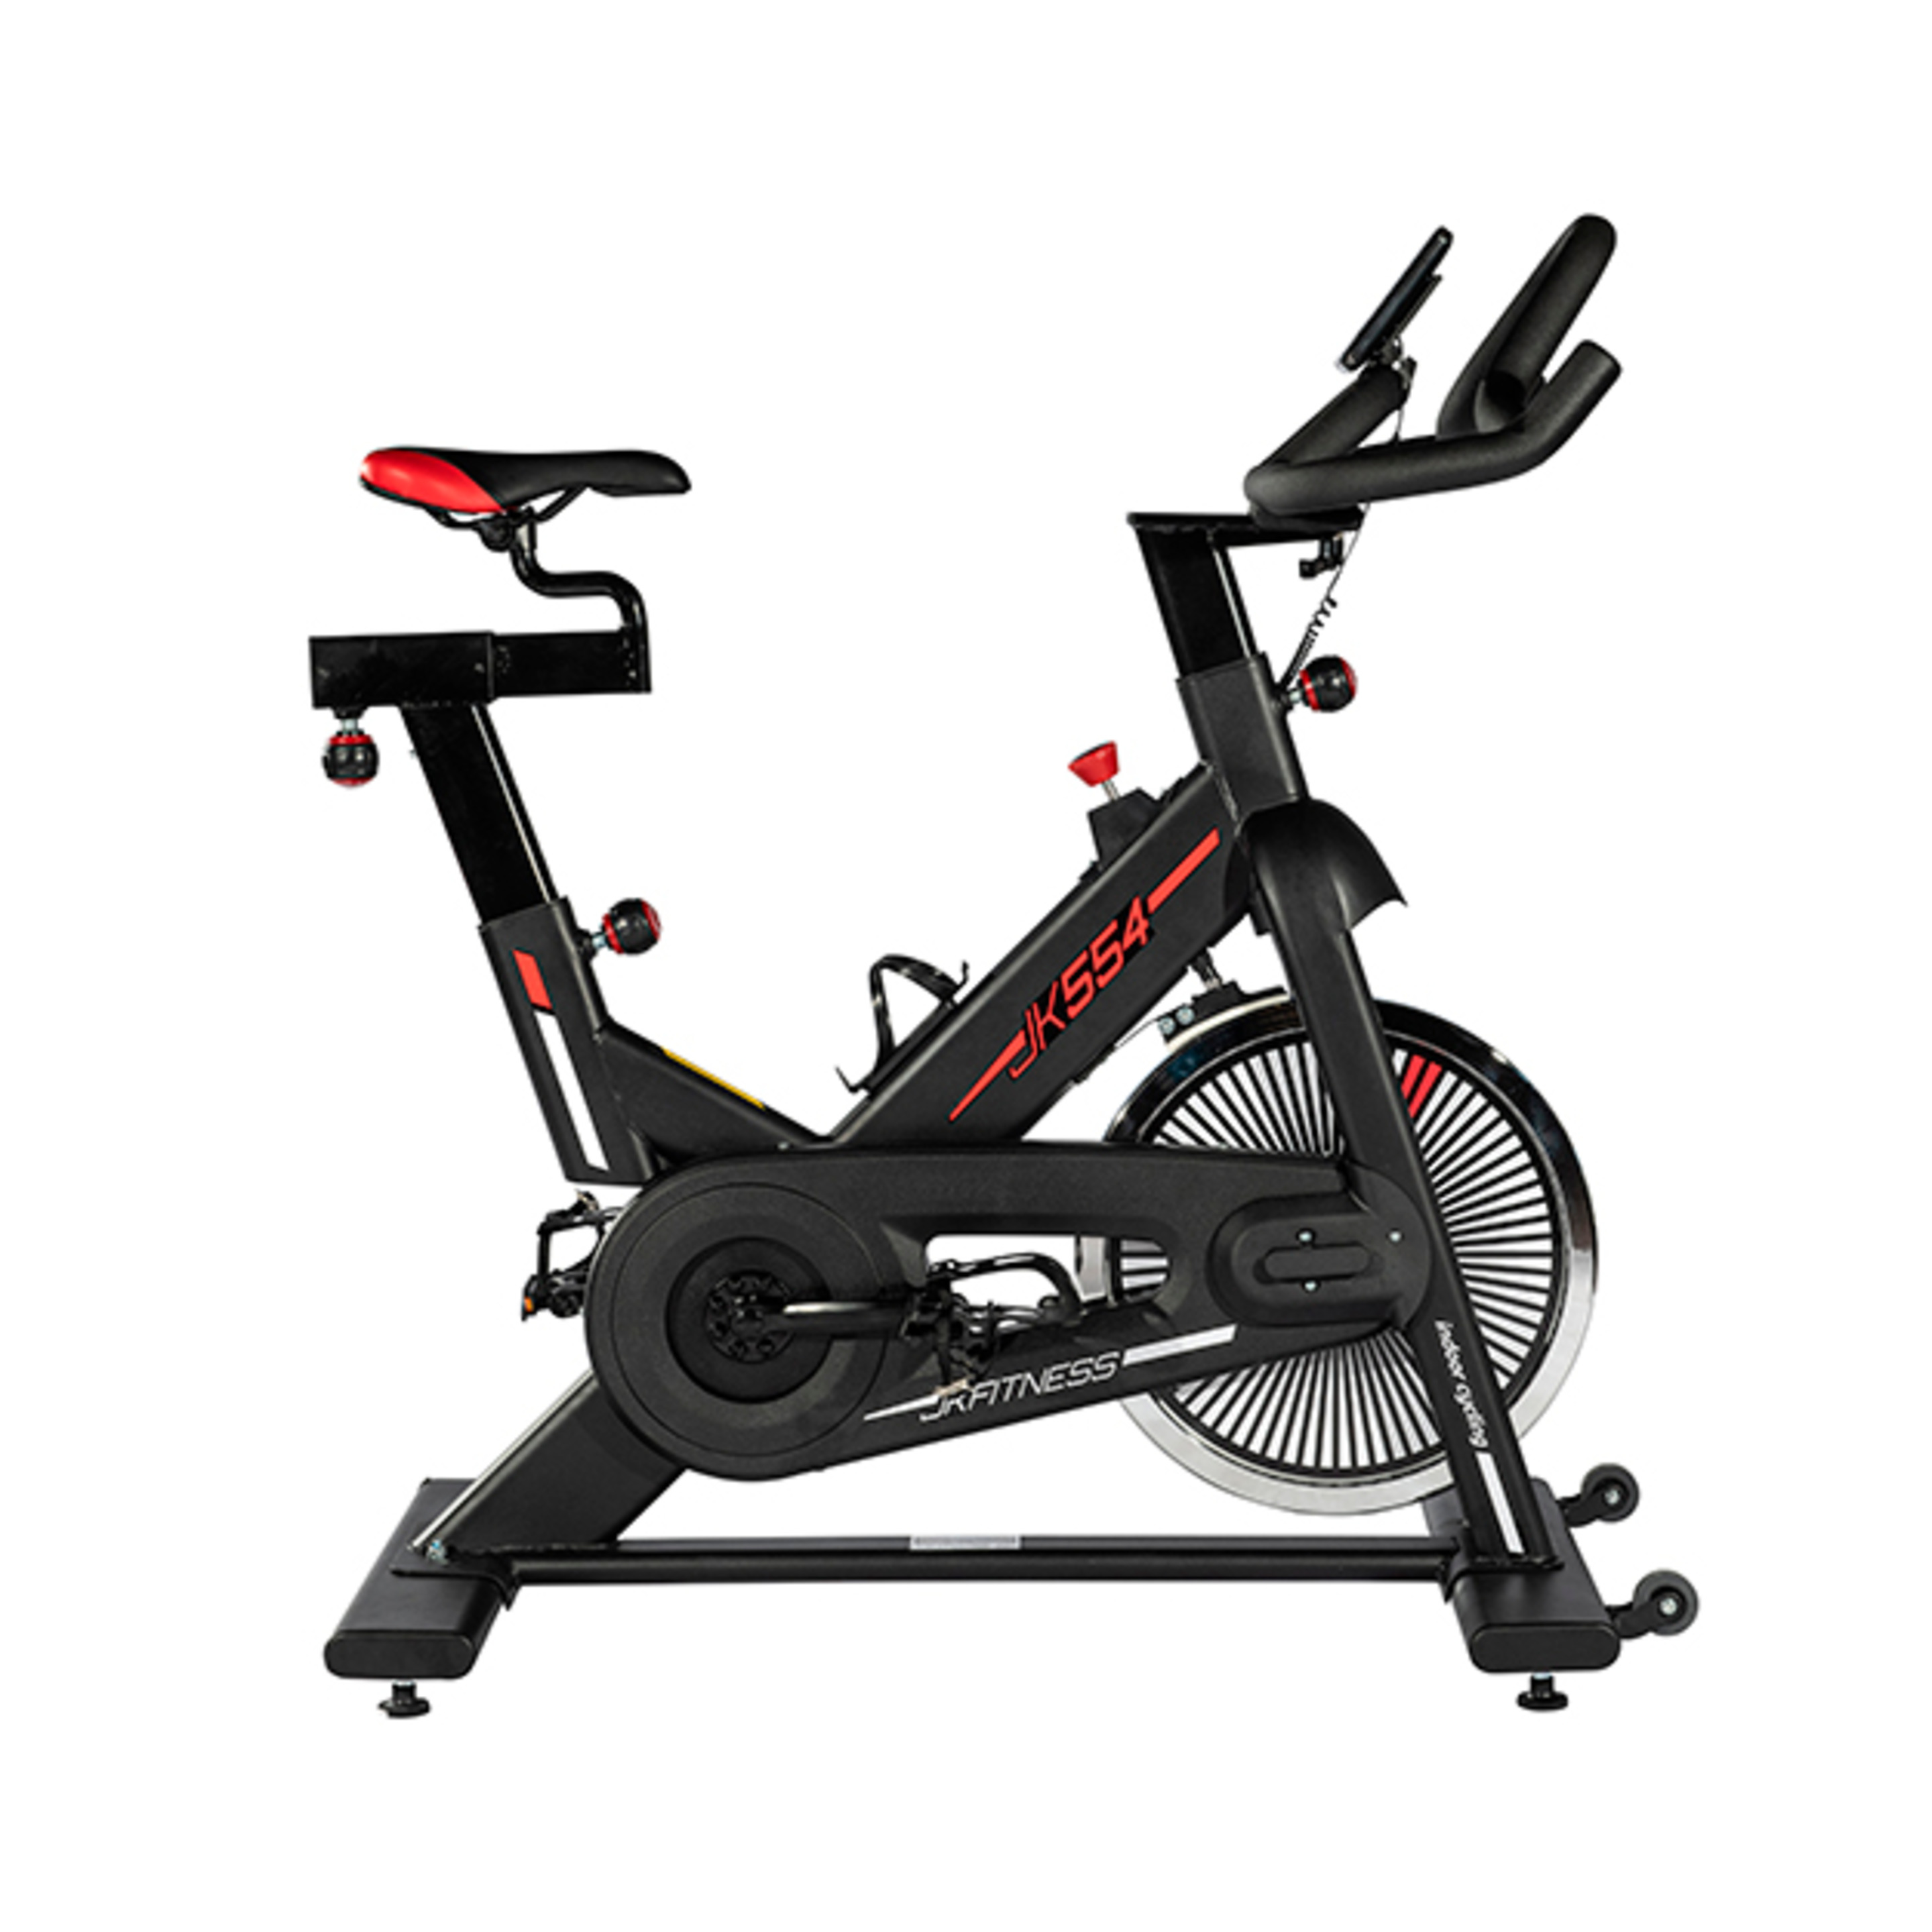 Bicicleta Indoor Jk Fitness  Jk554 - negro-rojo - 